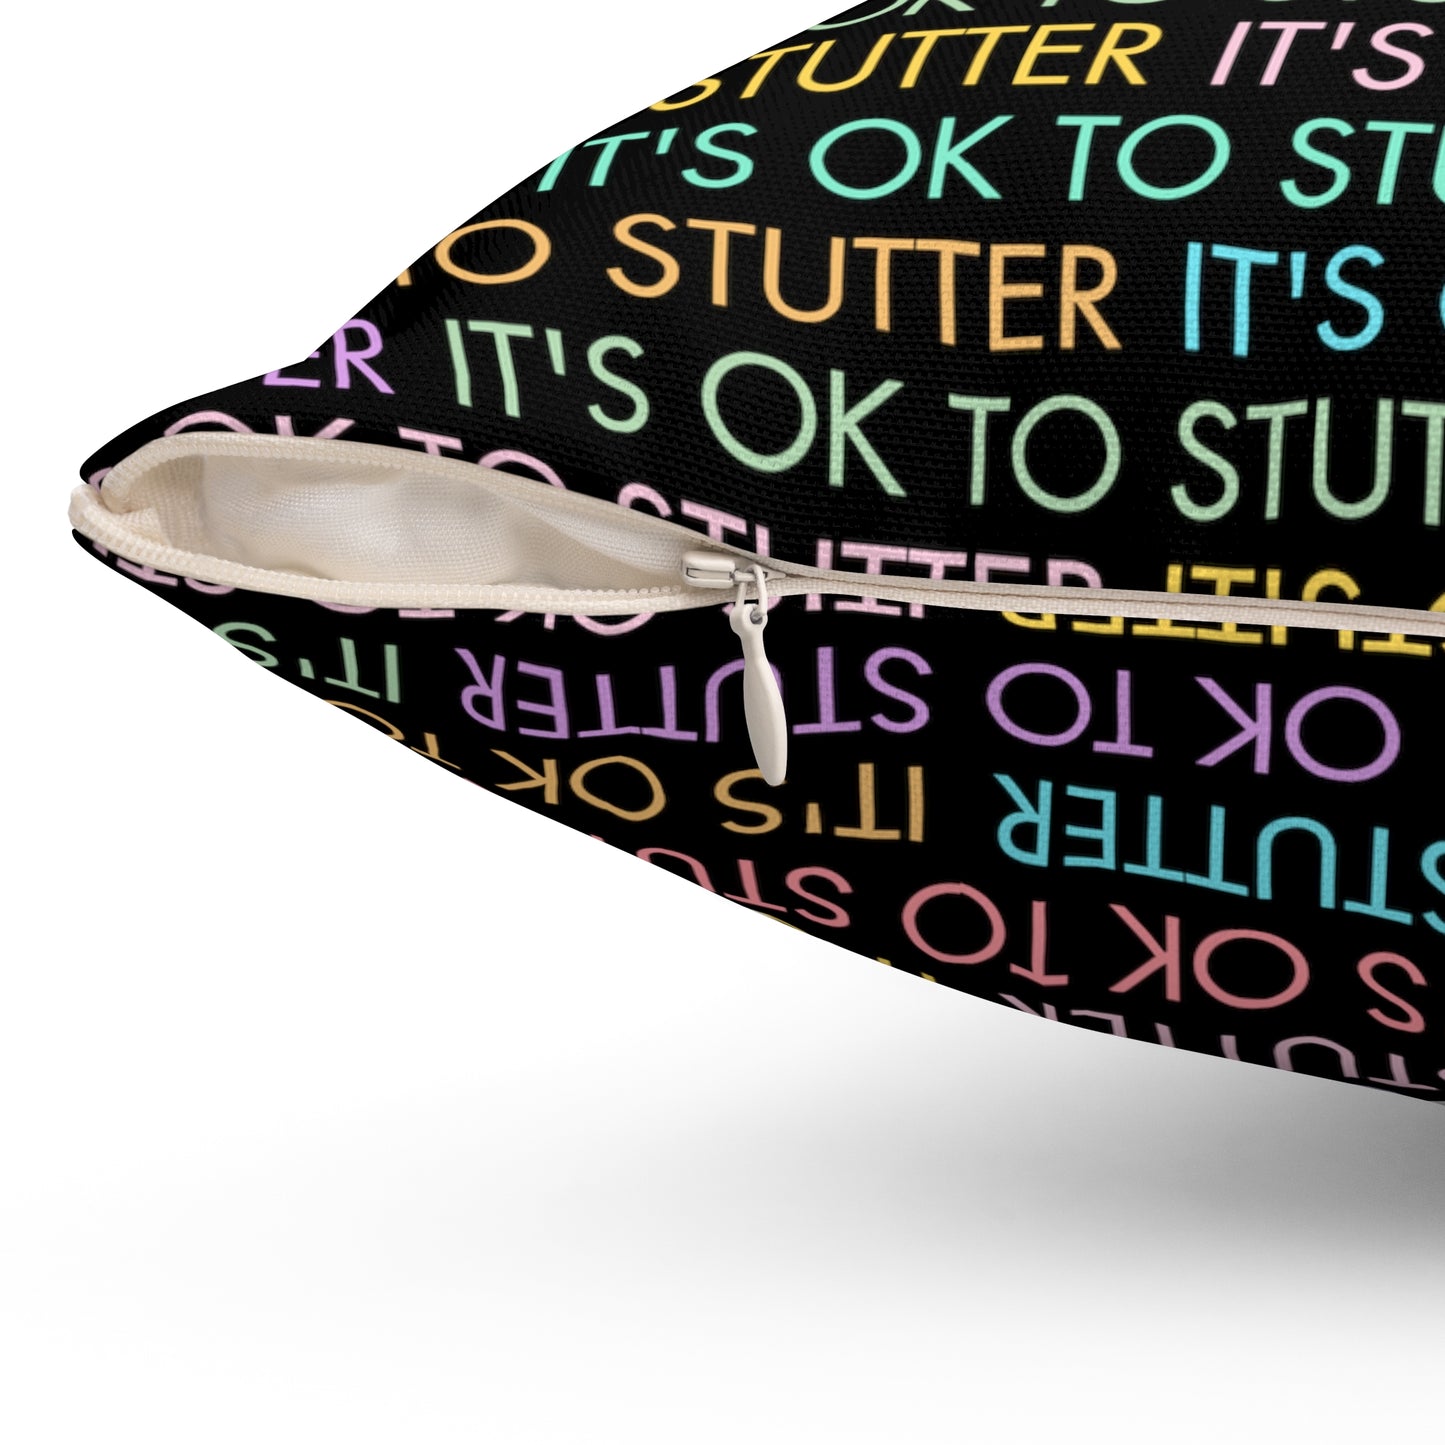 Black - It's OK to Stutter Pillow